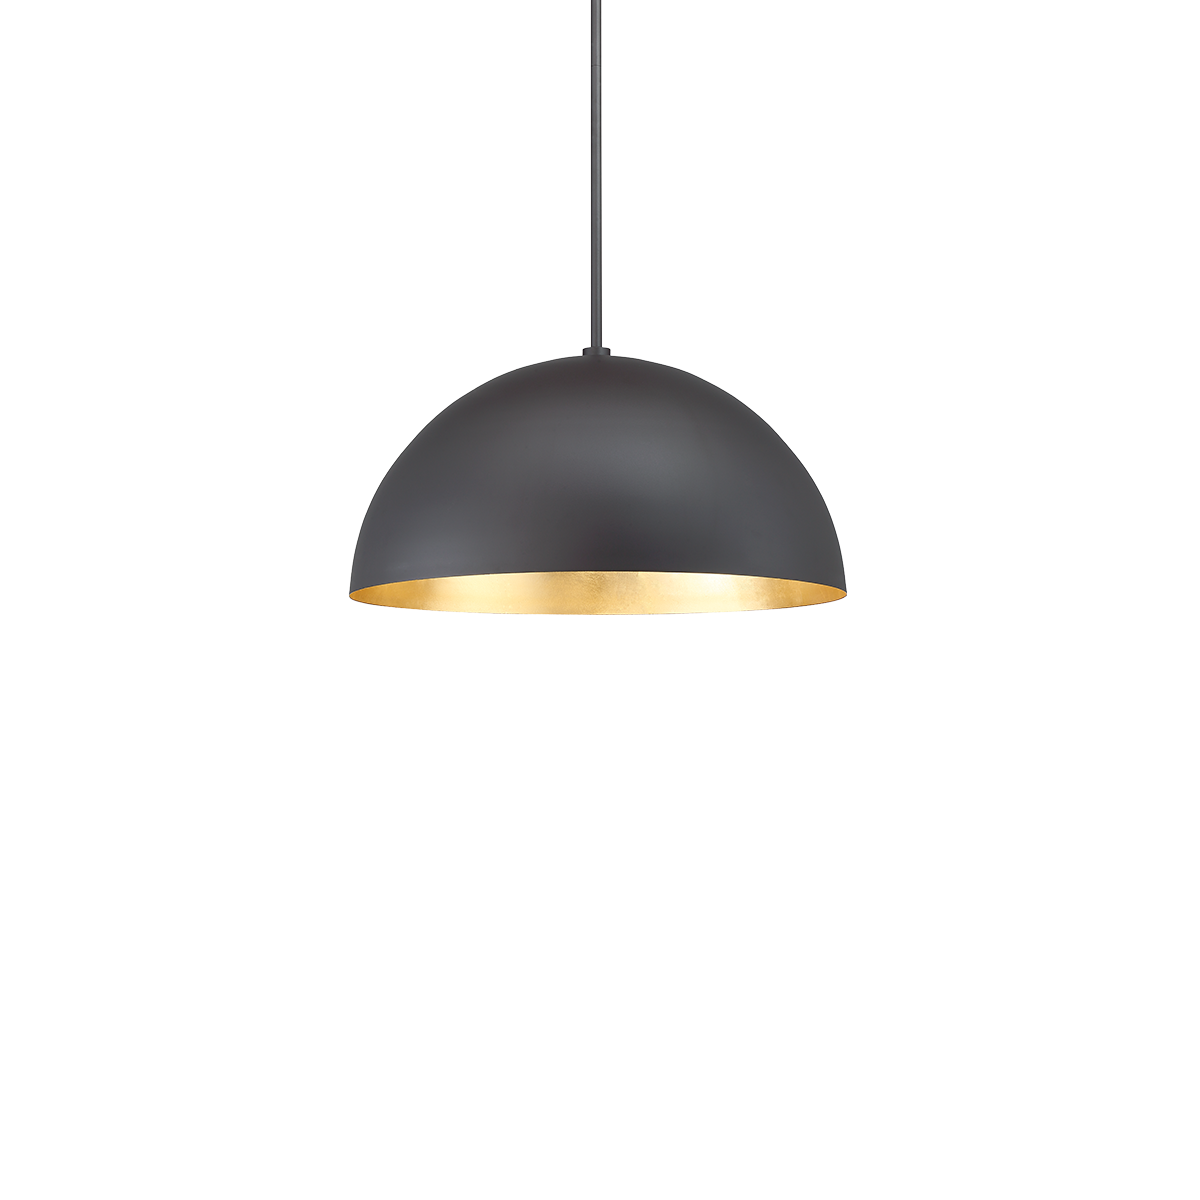 Modern Forms Yolo Dome Pendant Light Pendant Modern Forms Gold Leaf/Dark Bronze 19.63x19.63x10.25 